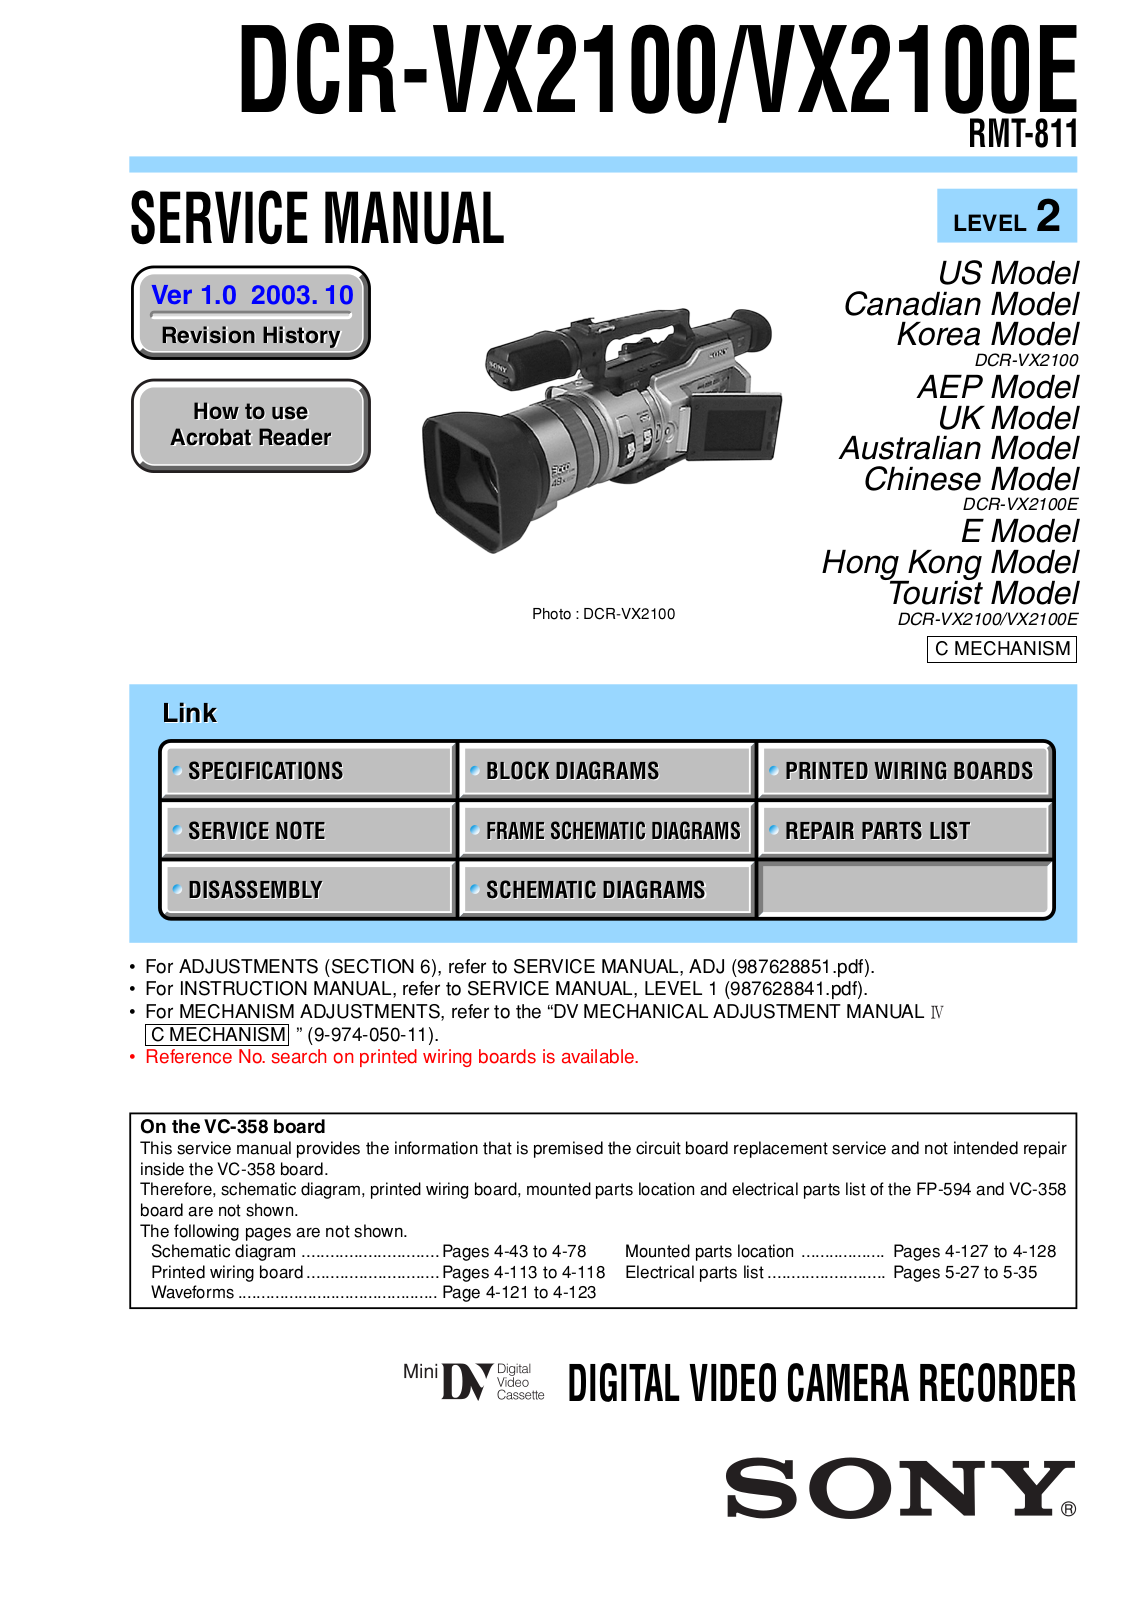 SONY DCR-VX2100 Service Manual